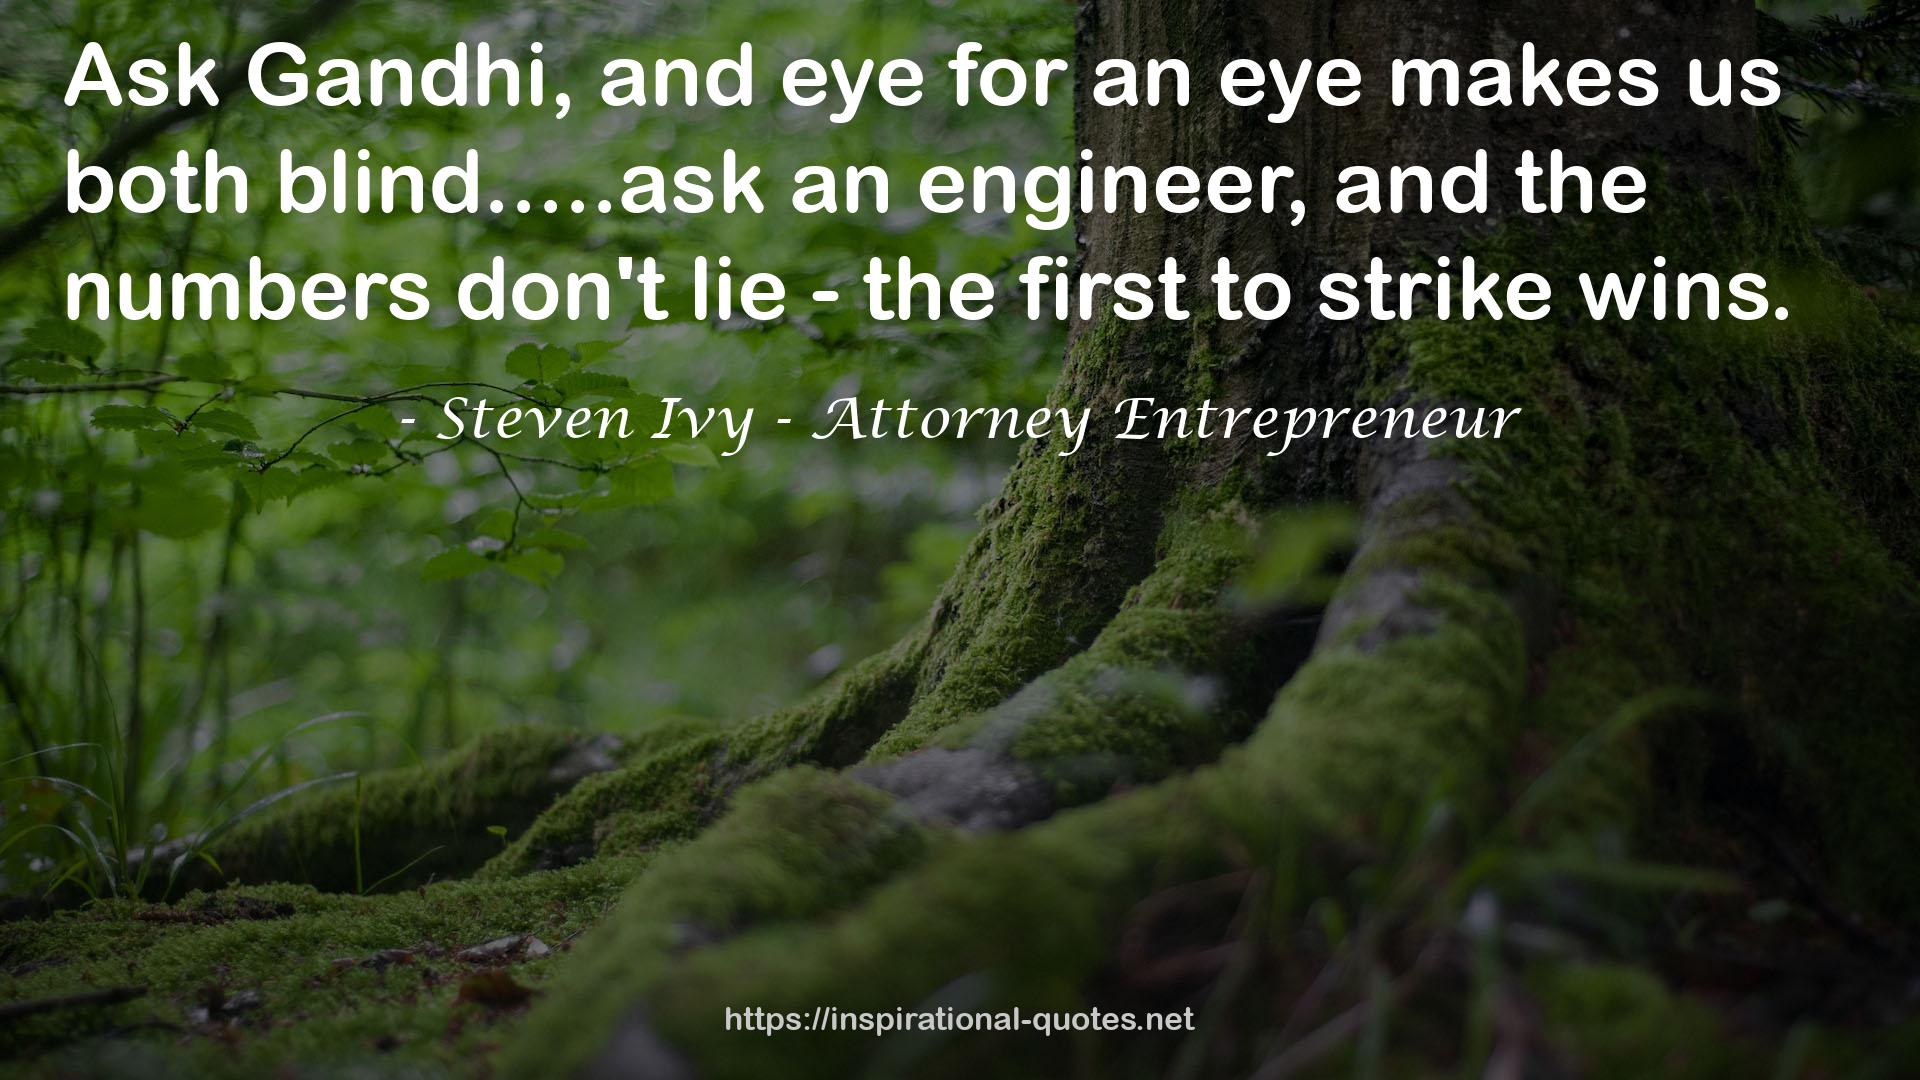 Steven Ivy - Attorney Entrepreneur QUOTES